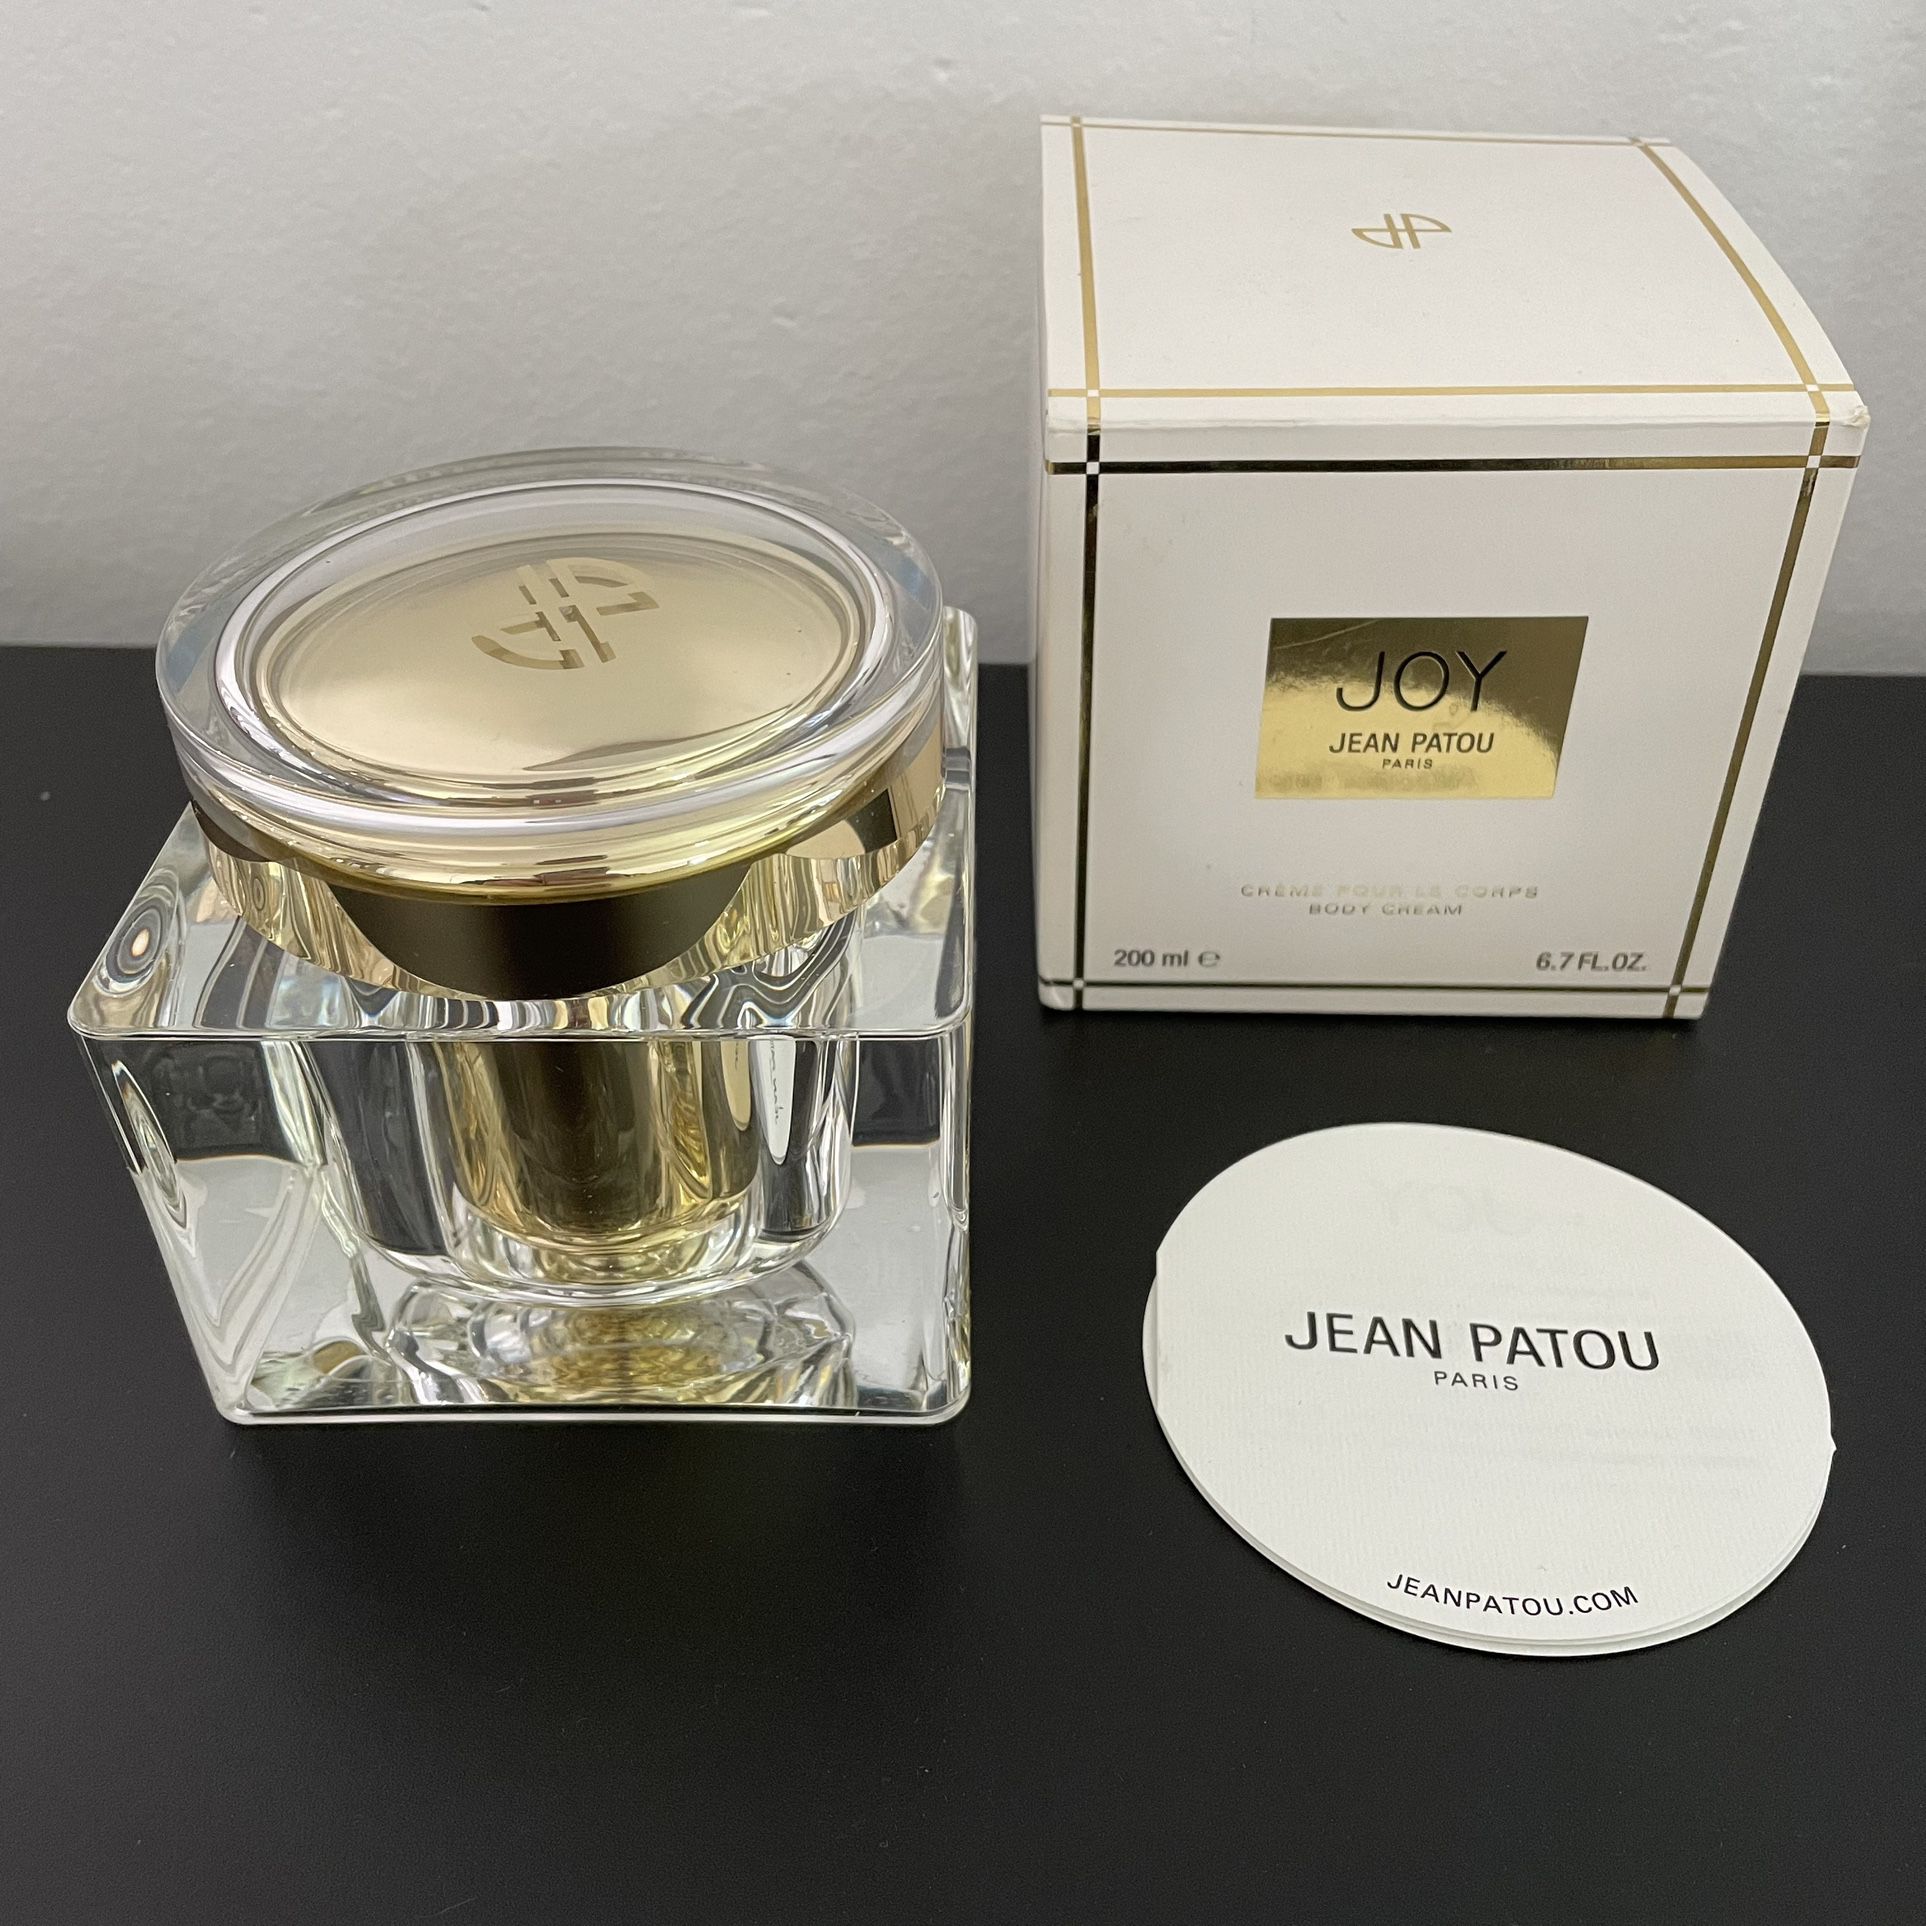 Joy by Jean Patou Body Cream 6.7 oz - Rare Discontinued